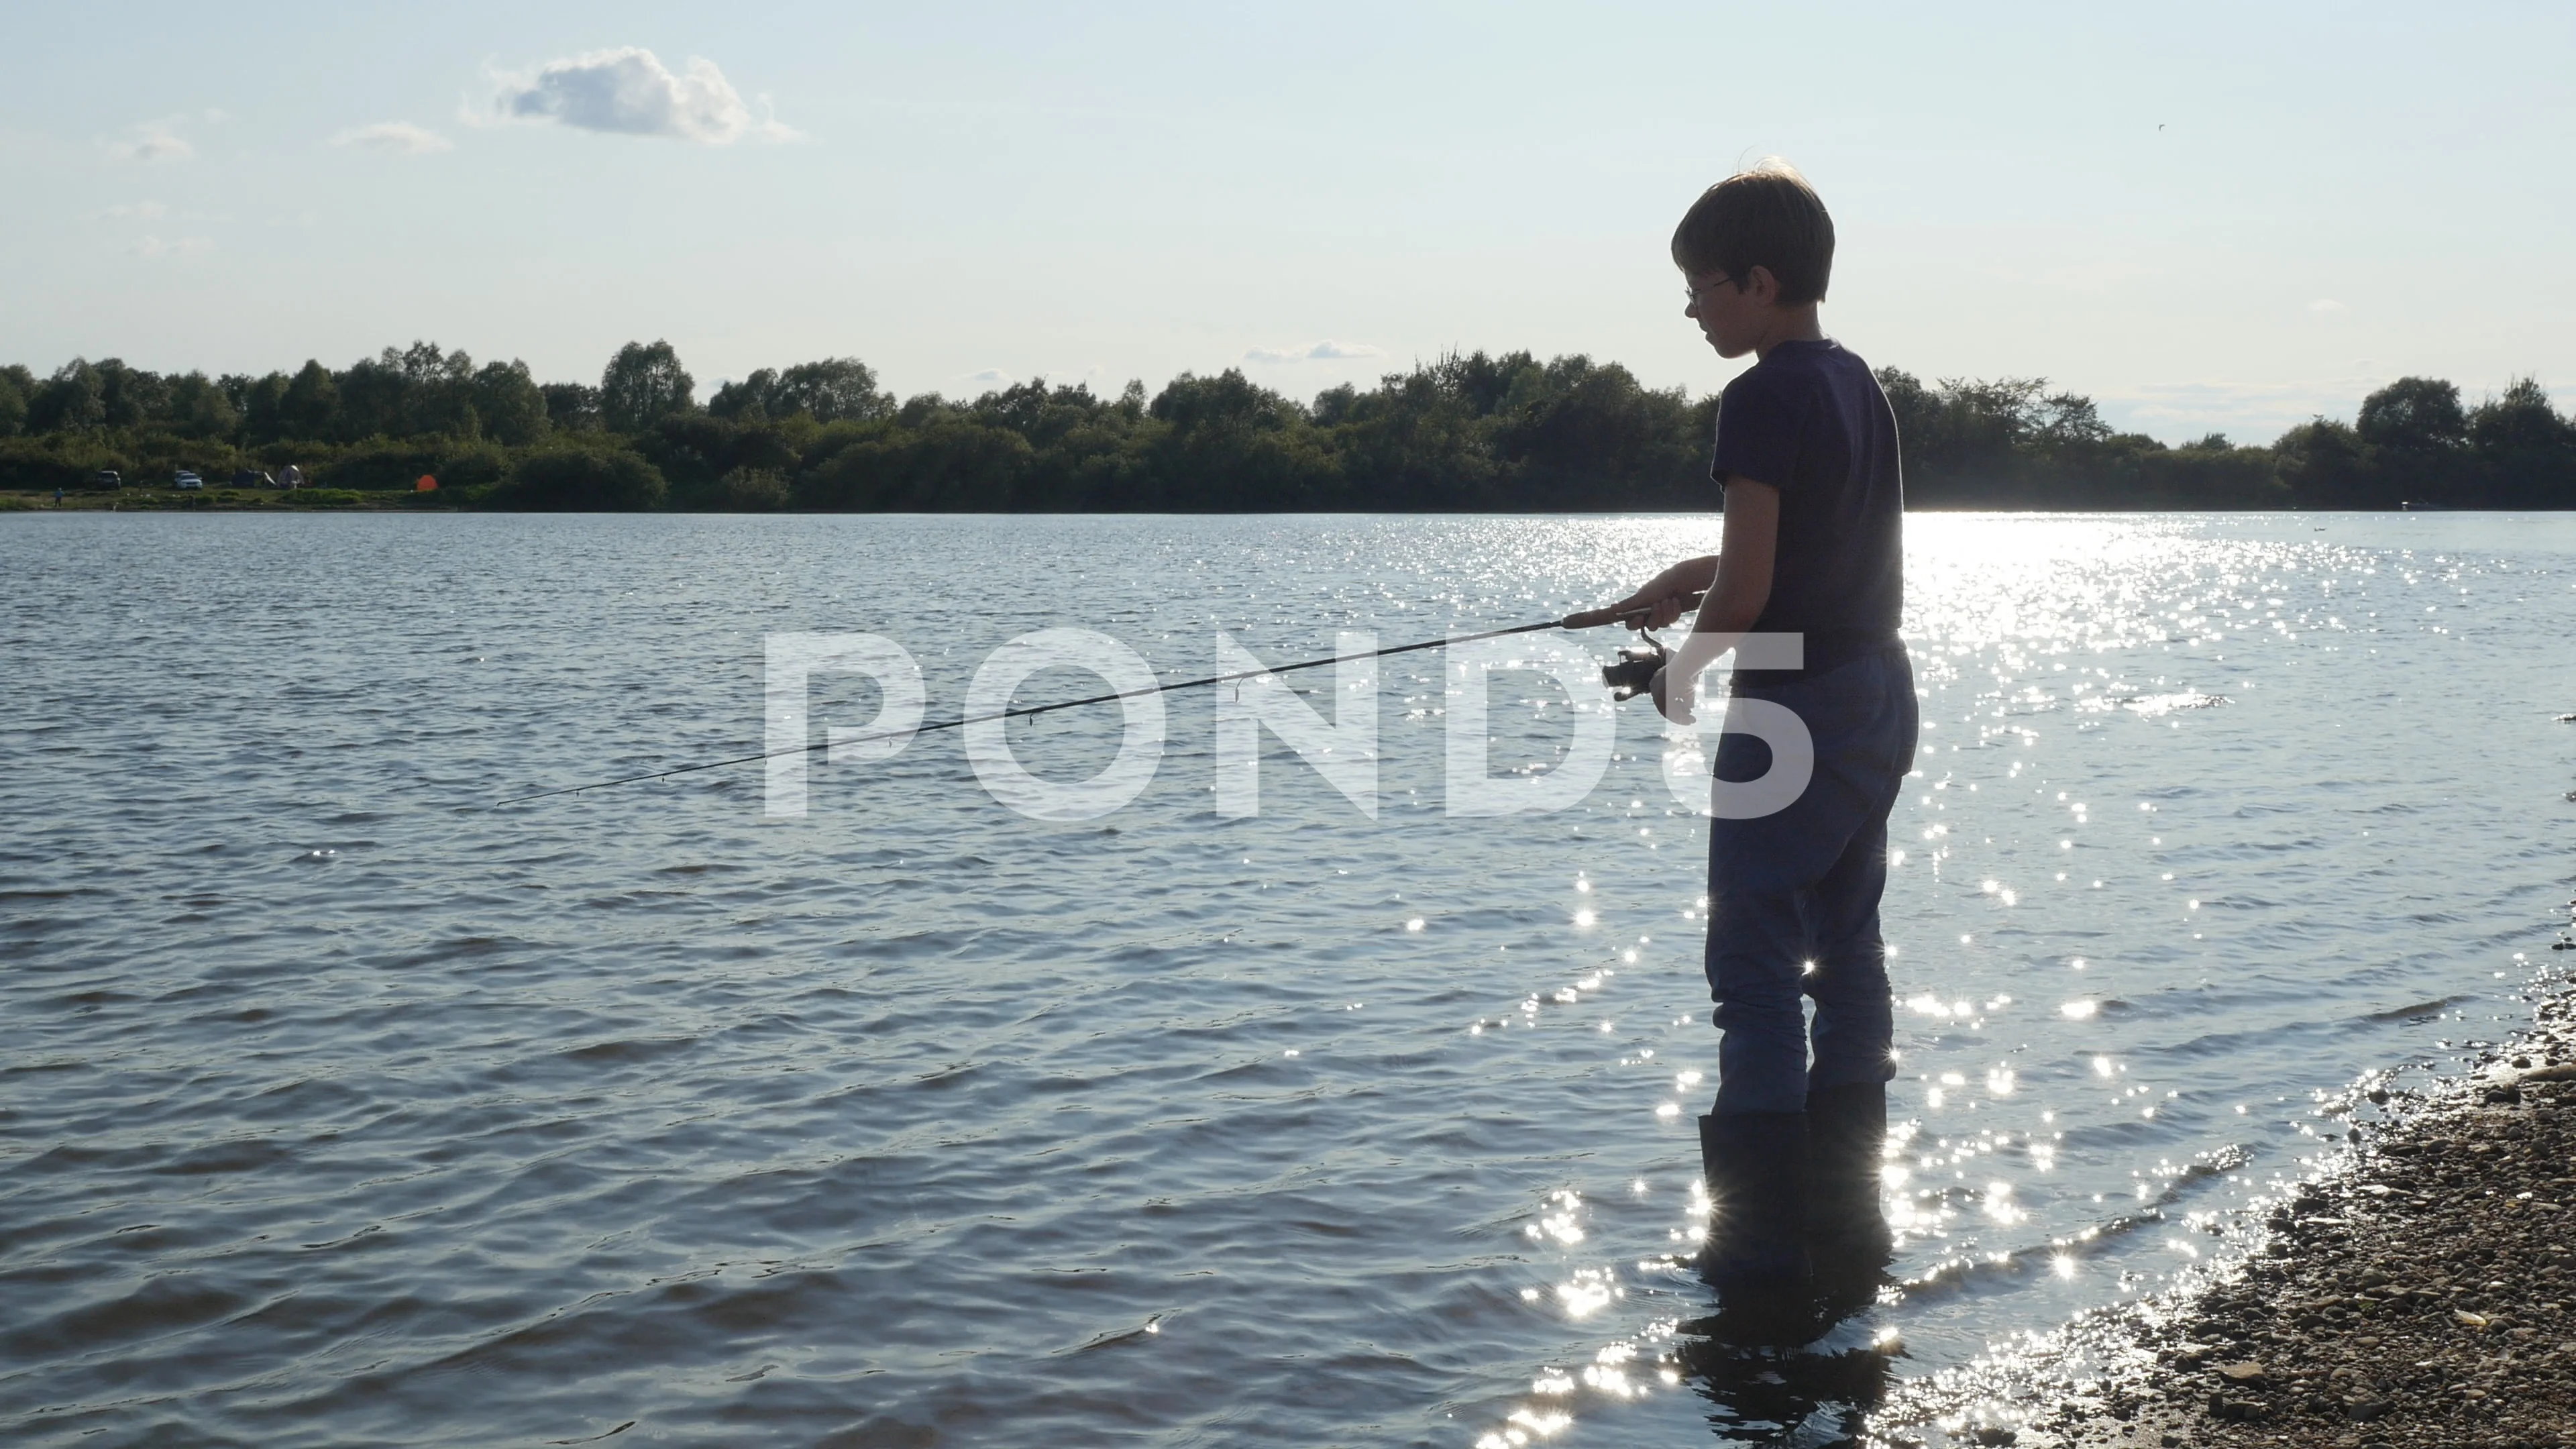 https://images.pond5.com/silhouette-teen-boy-fishing-spinning-footage-094378282_prevstill.jpeg